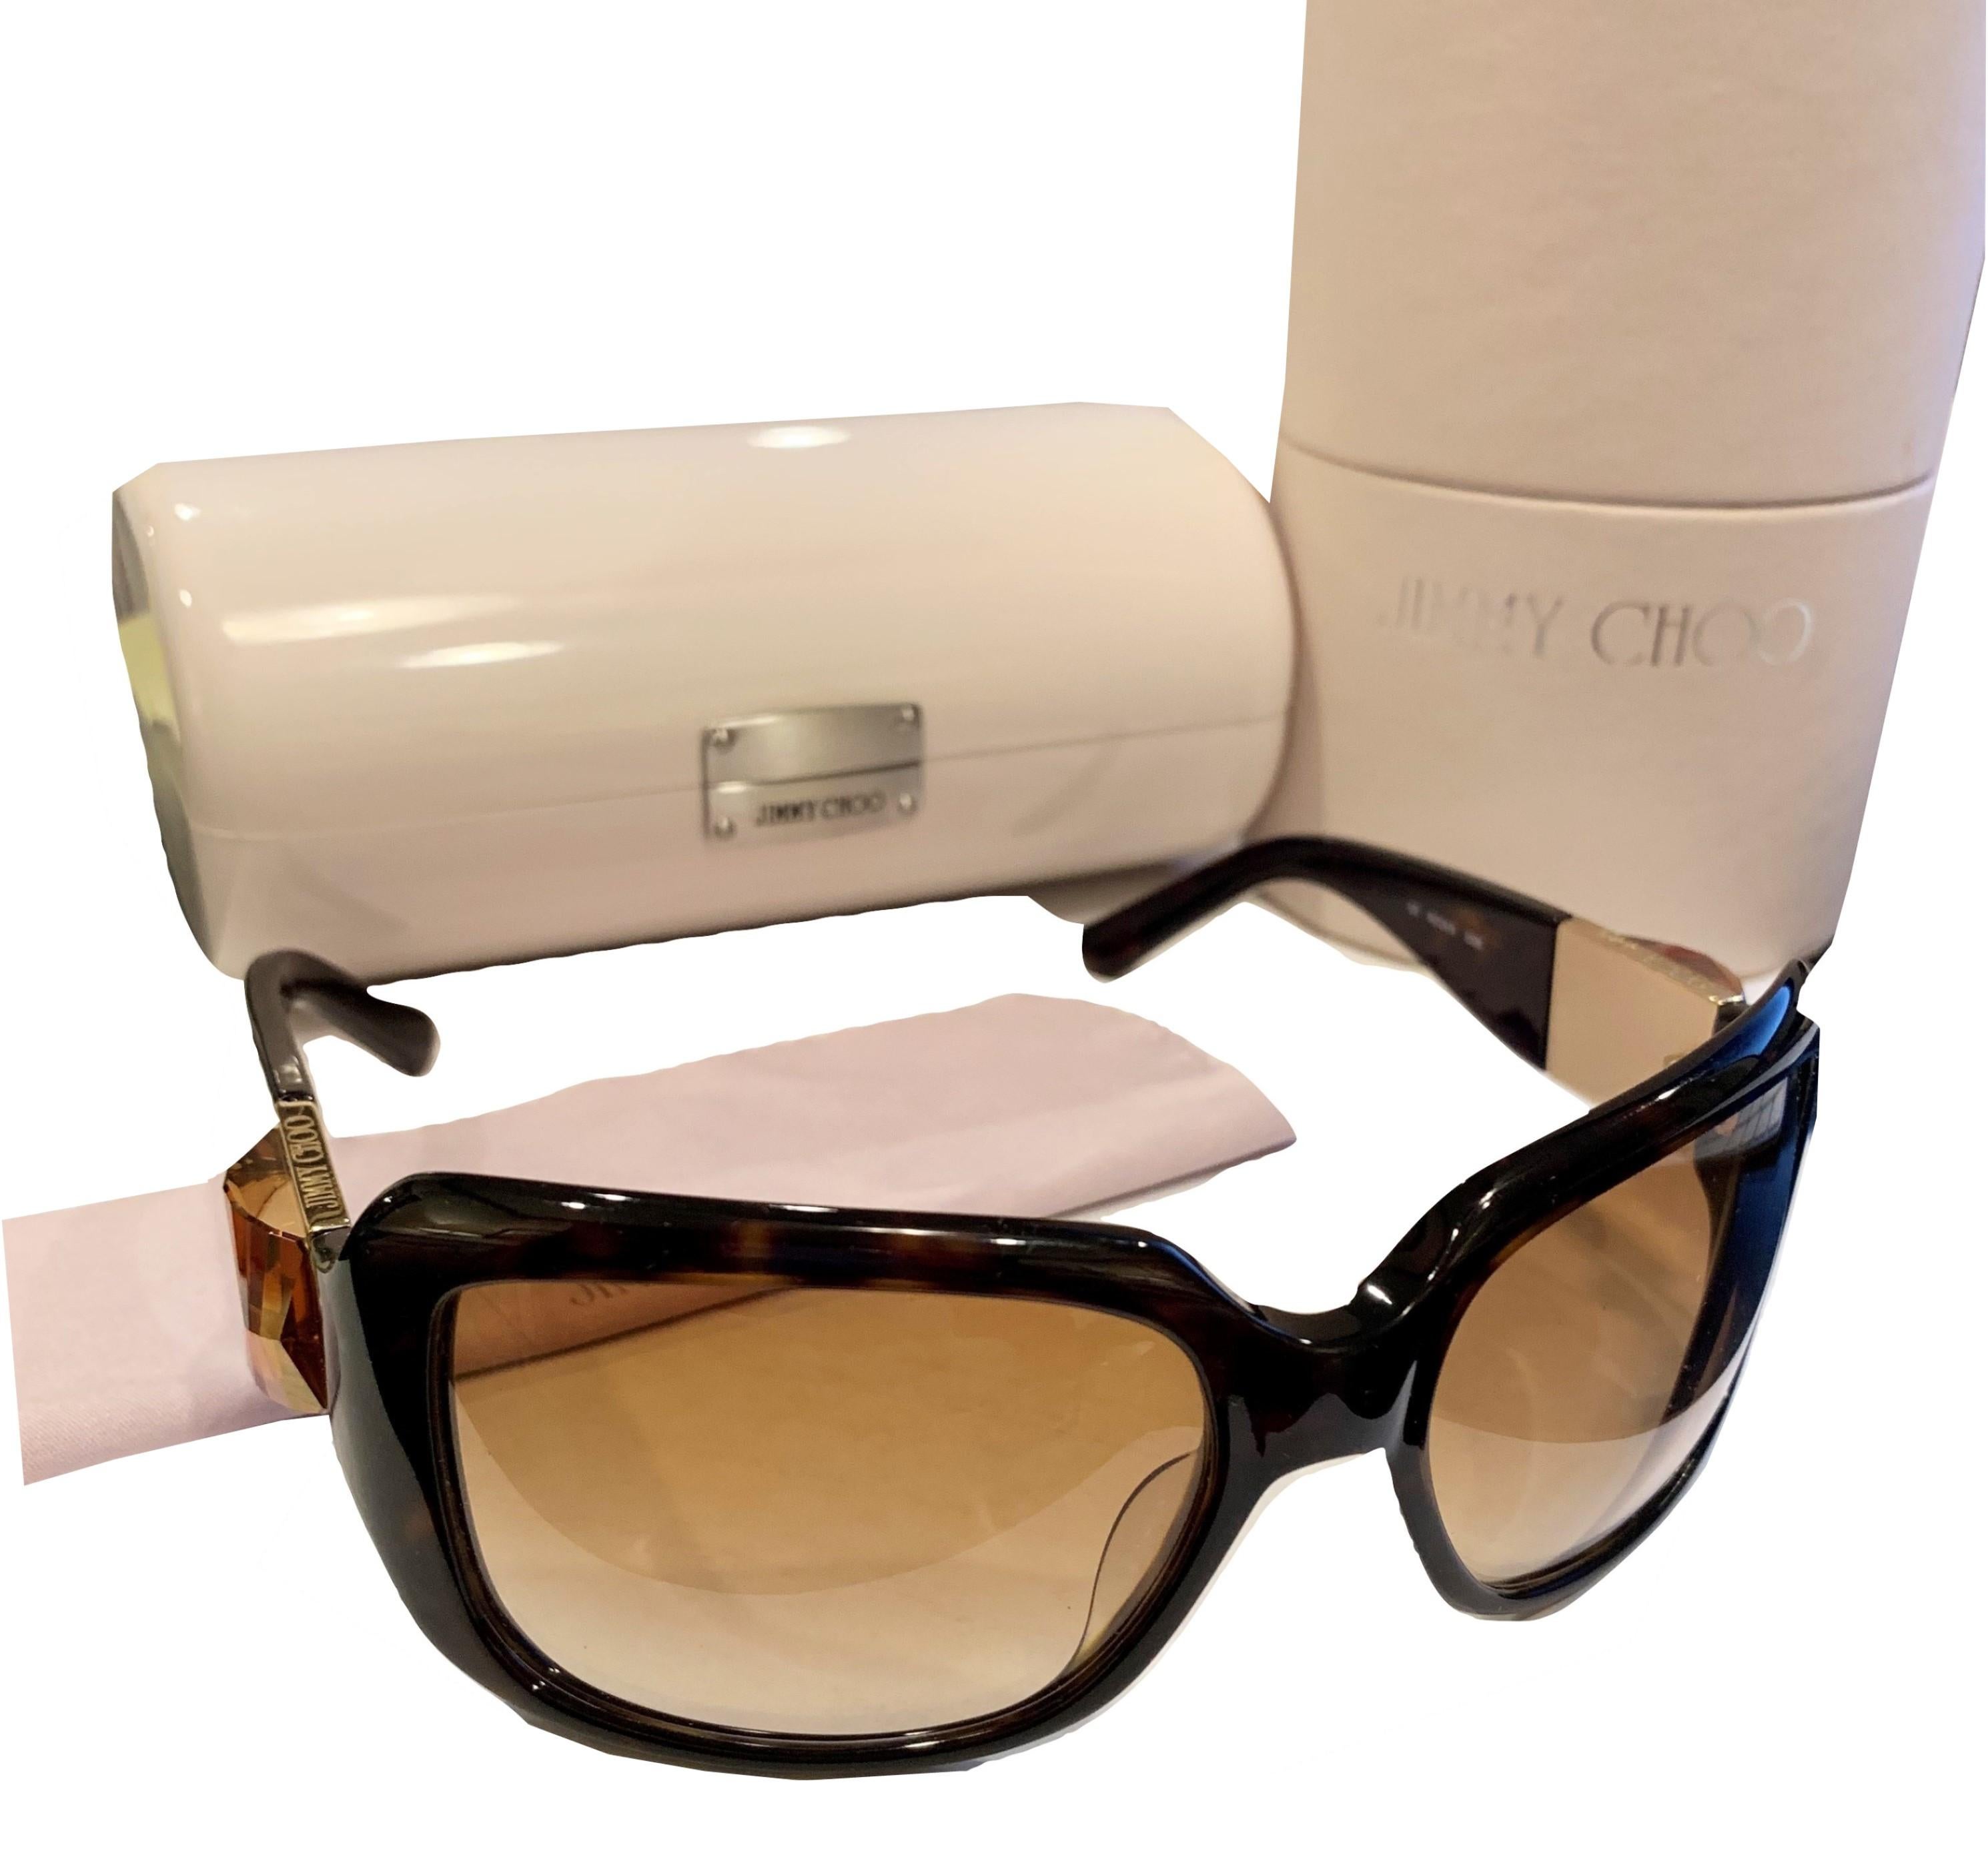 New Jimmy Choo Swarovski Sunglasses With Case & Box $595 3